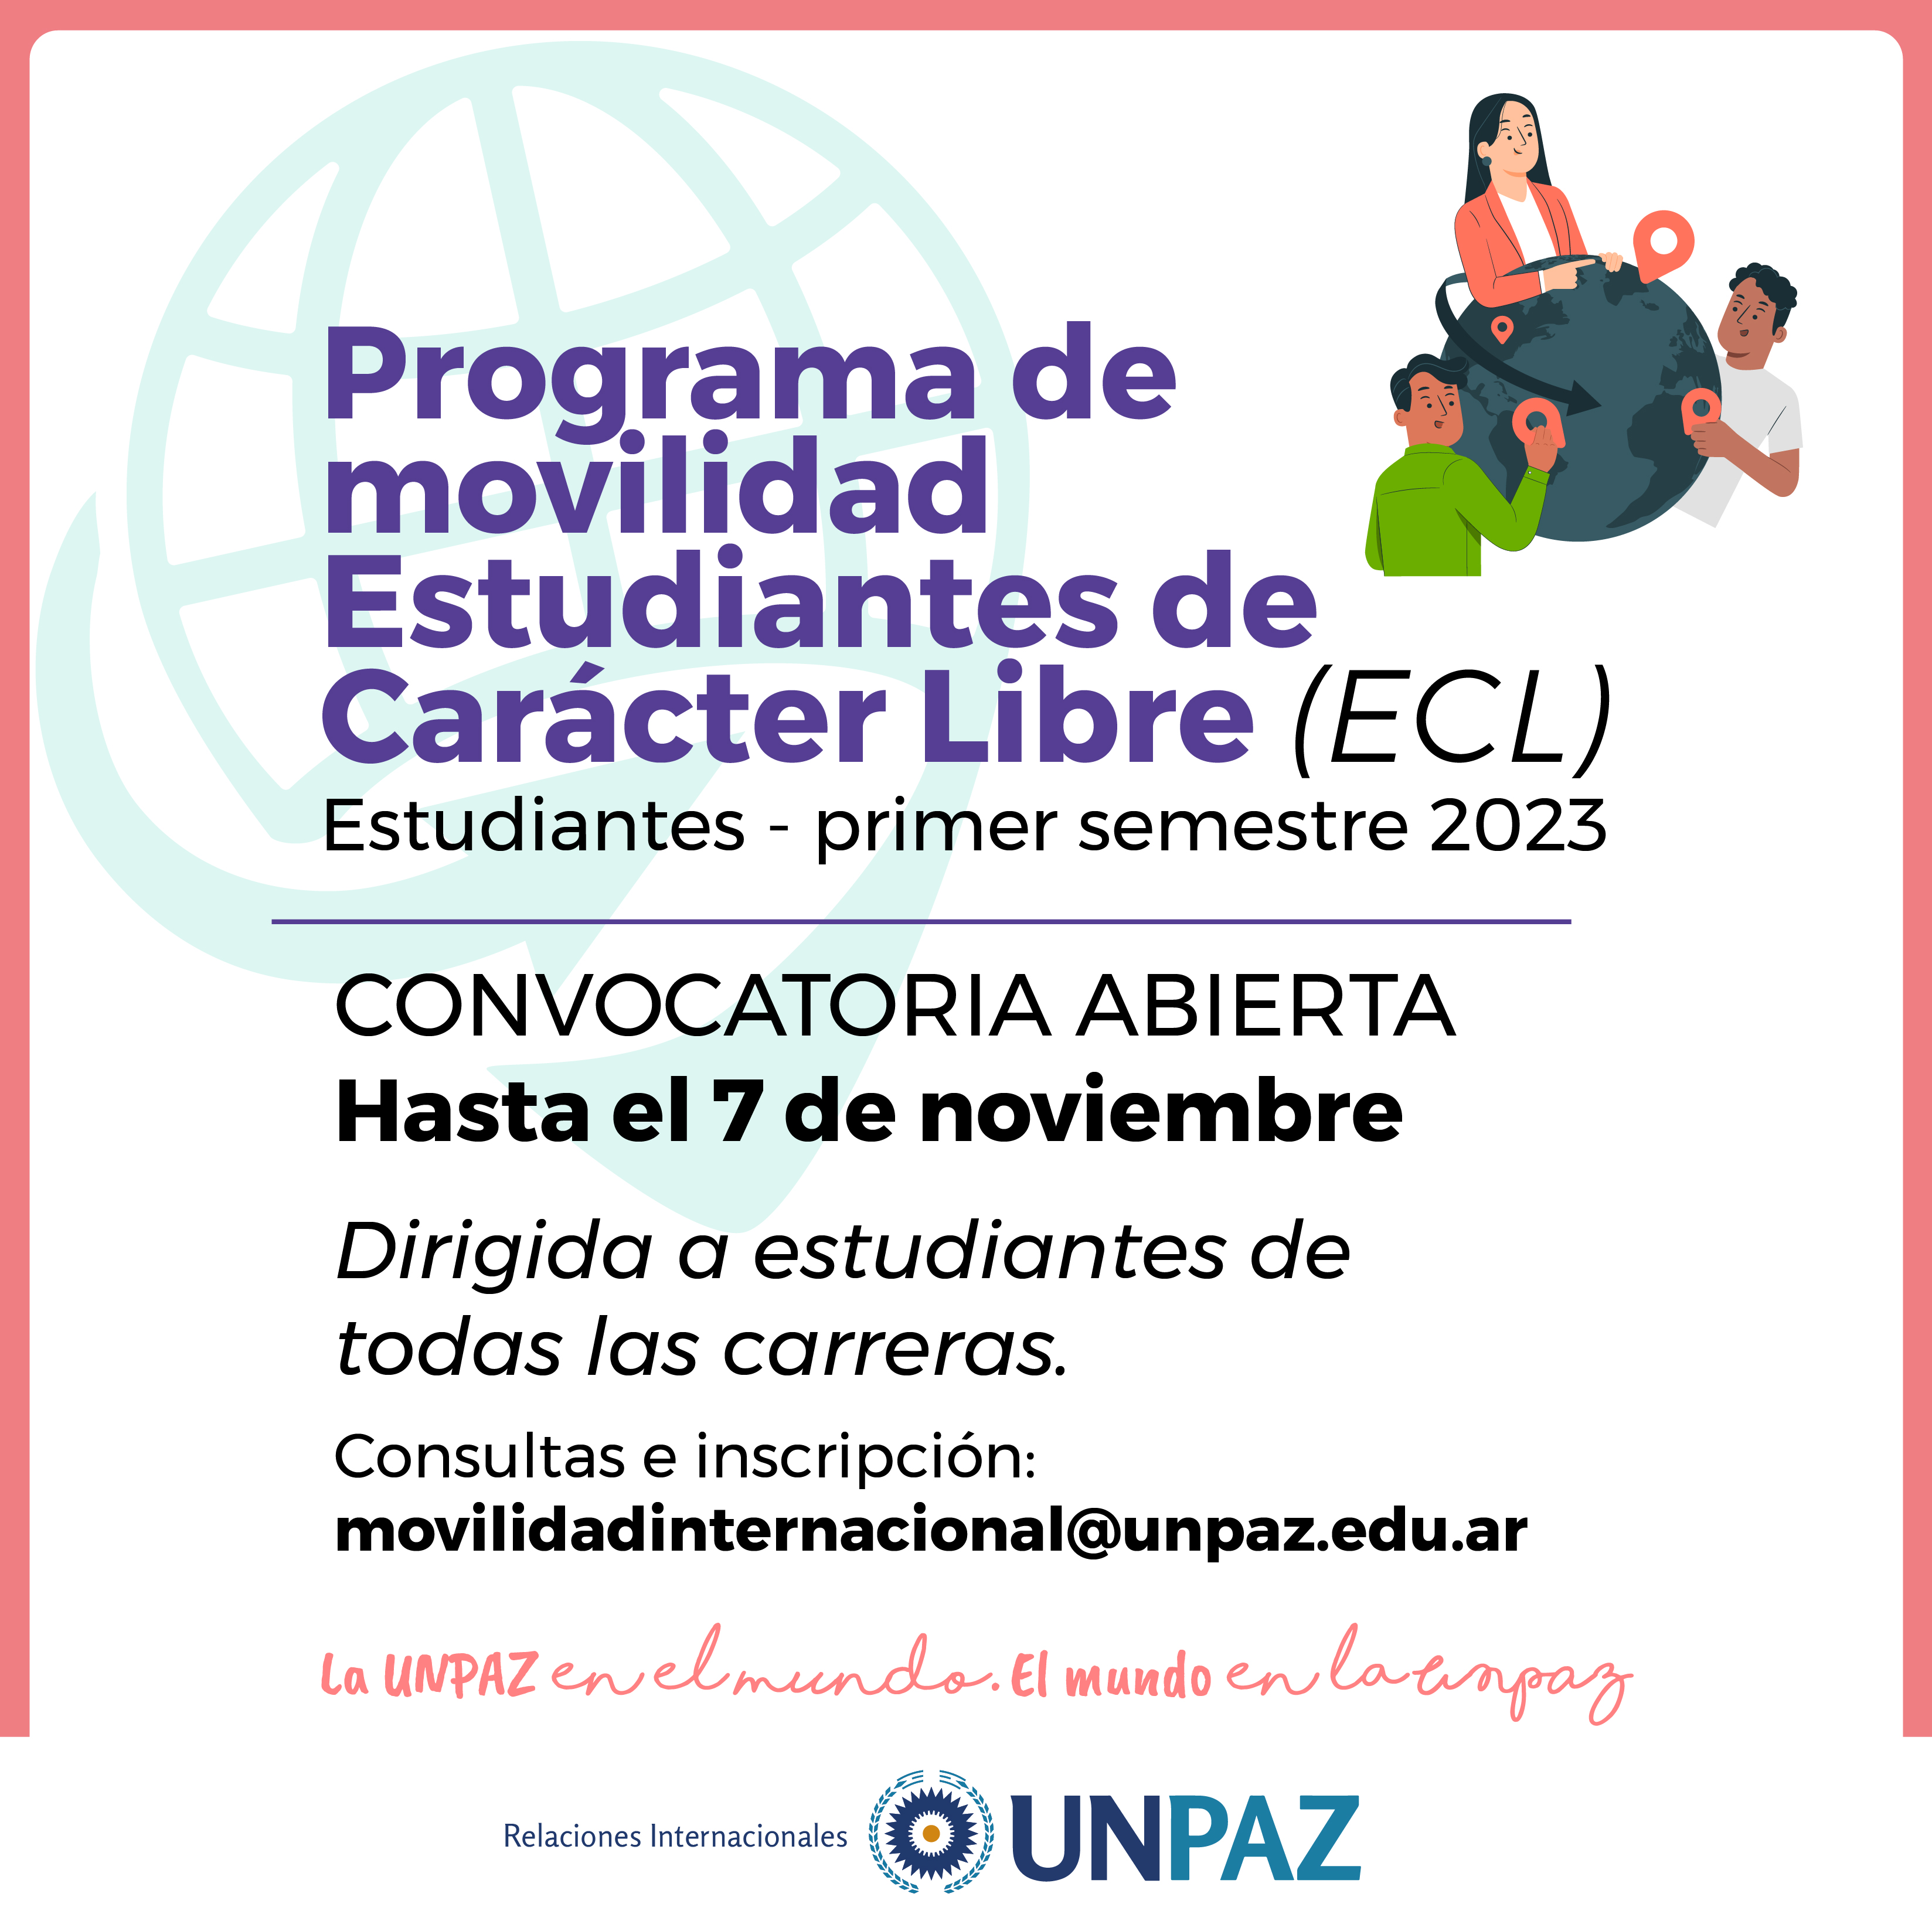 PROGRAMA DE MOVILIDAD ESTUDIANTES DE CARÁCTER LIBRE (ECL) PRIMER SEMESTRE 2023 - UNPAZ